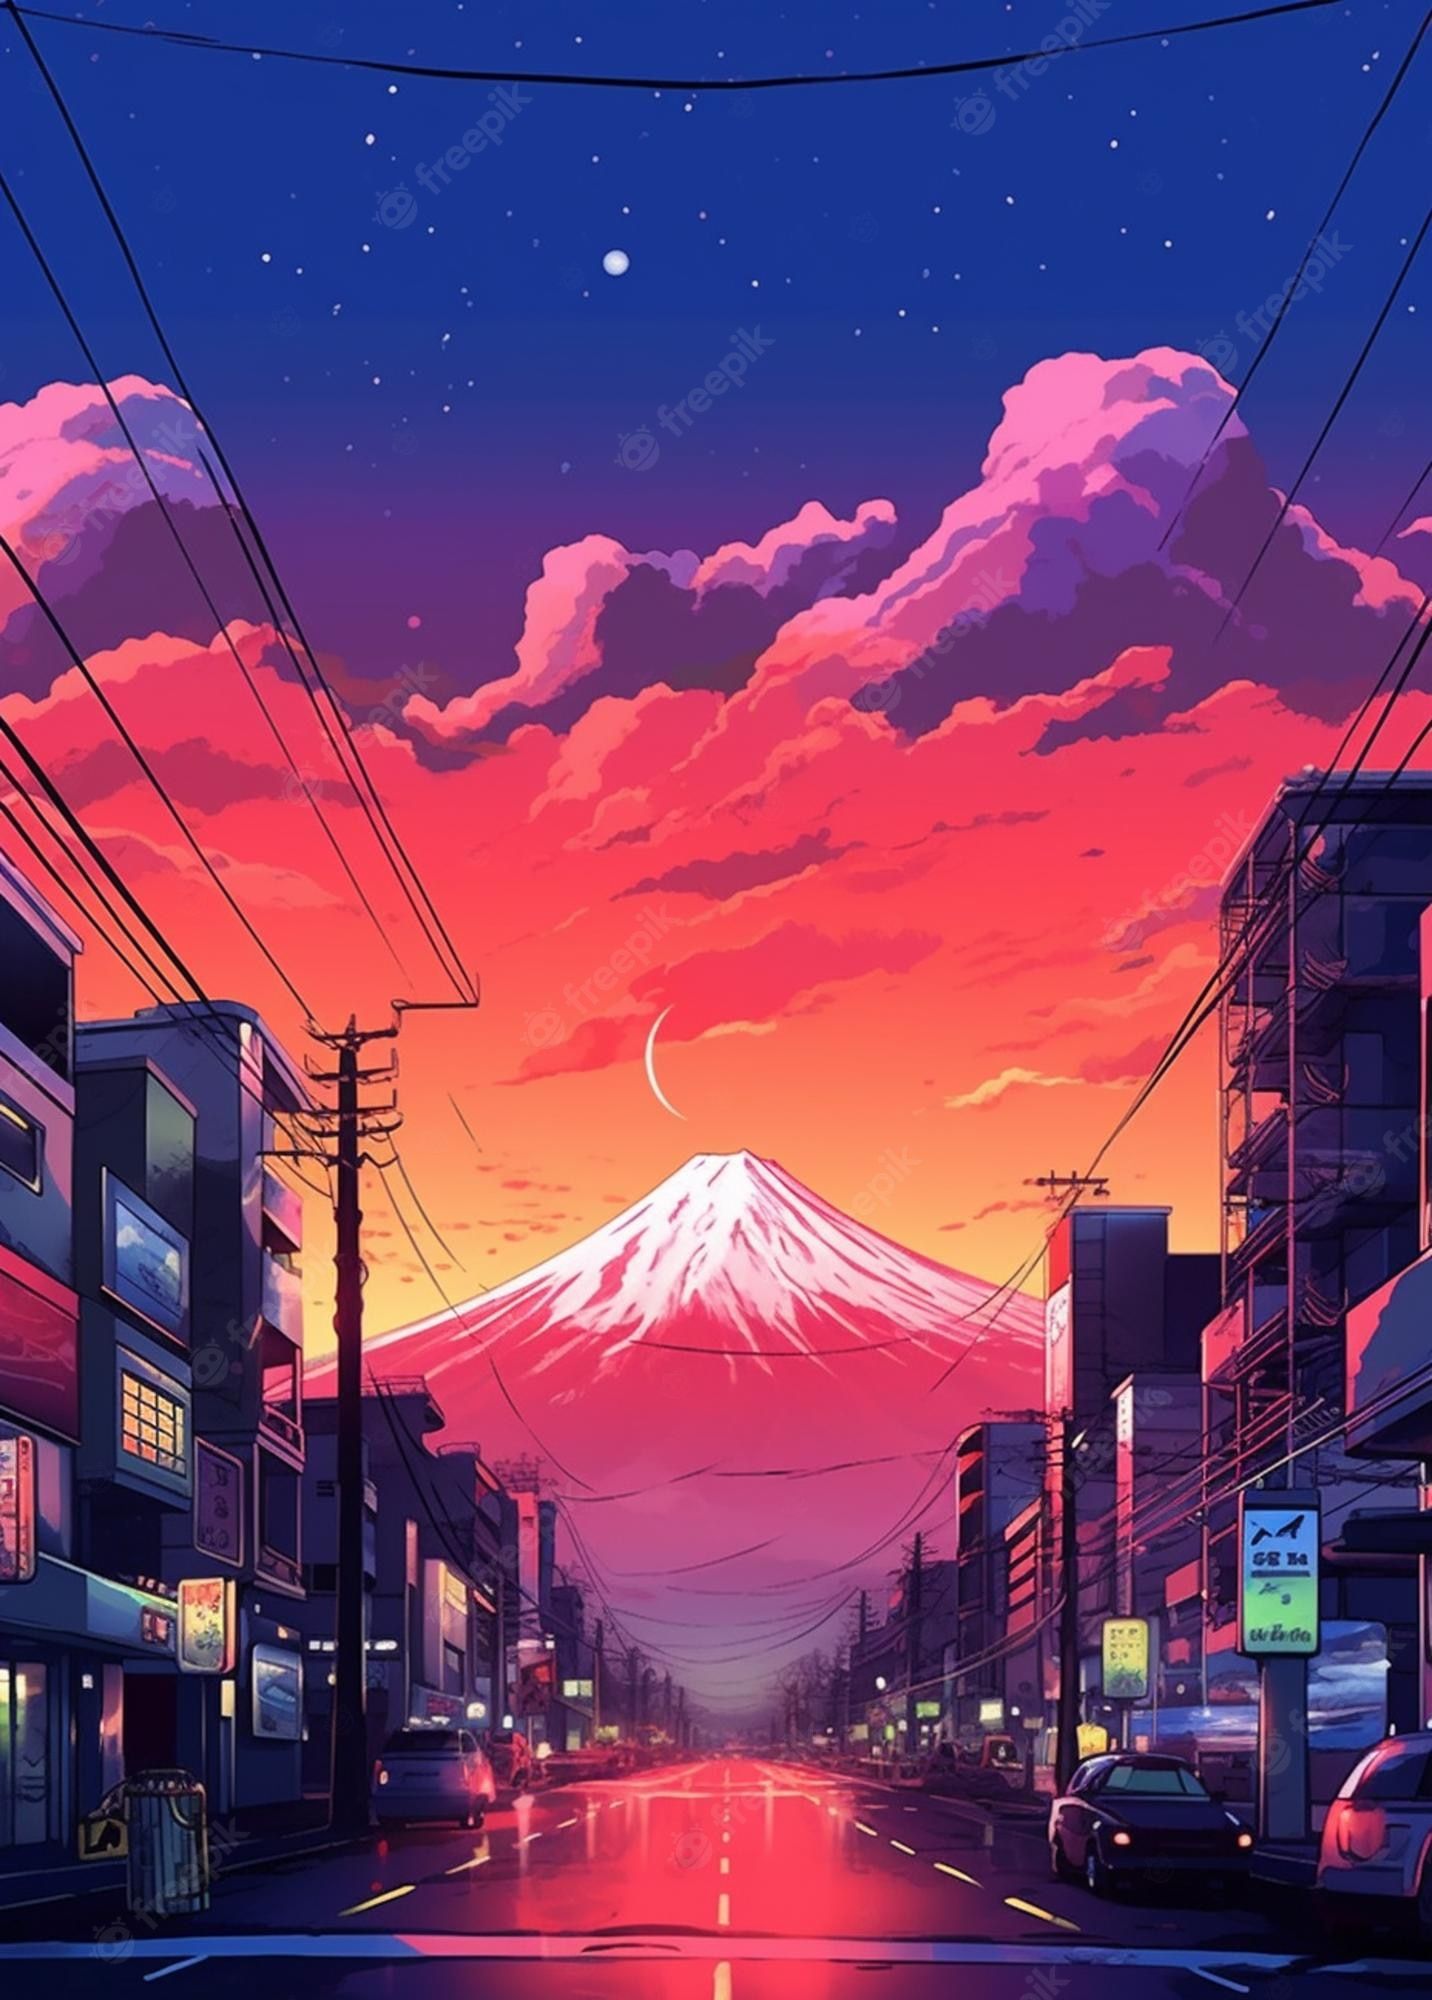 Anime Background Wallpaper Image